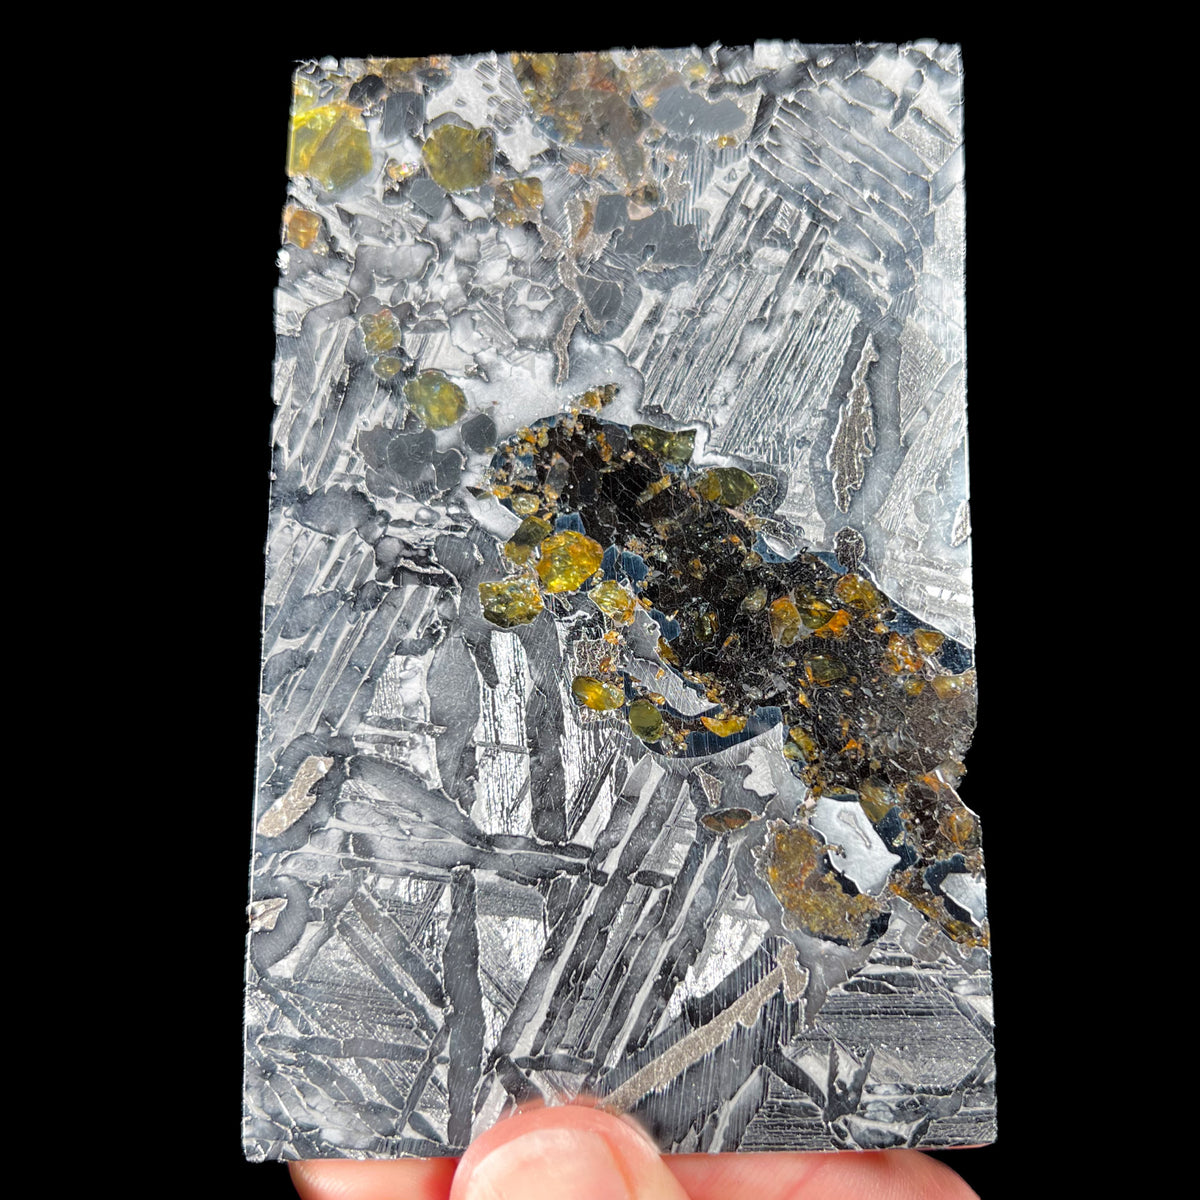 Large slice of Seymchan Pallasite Meteorite